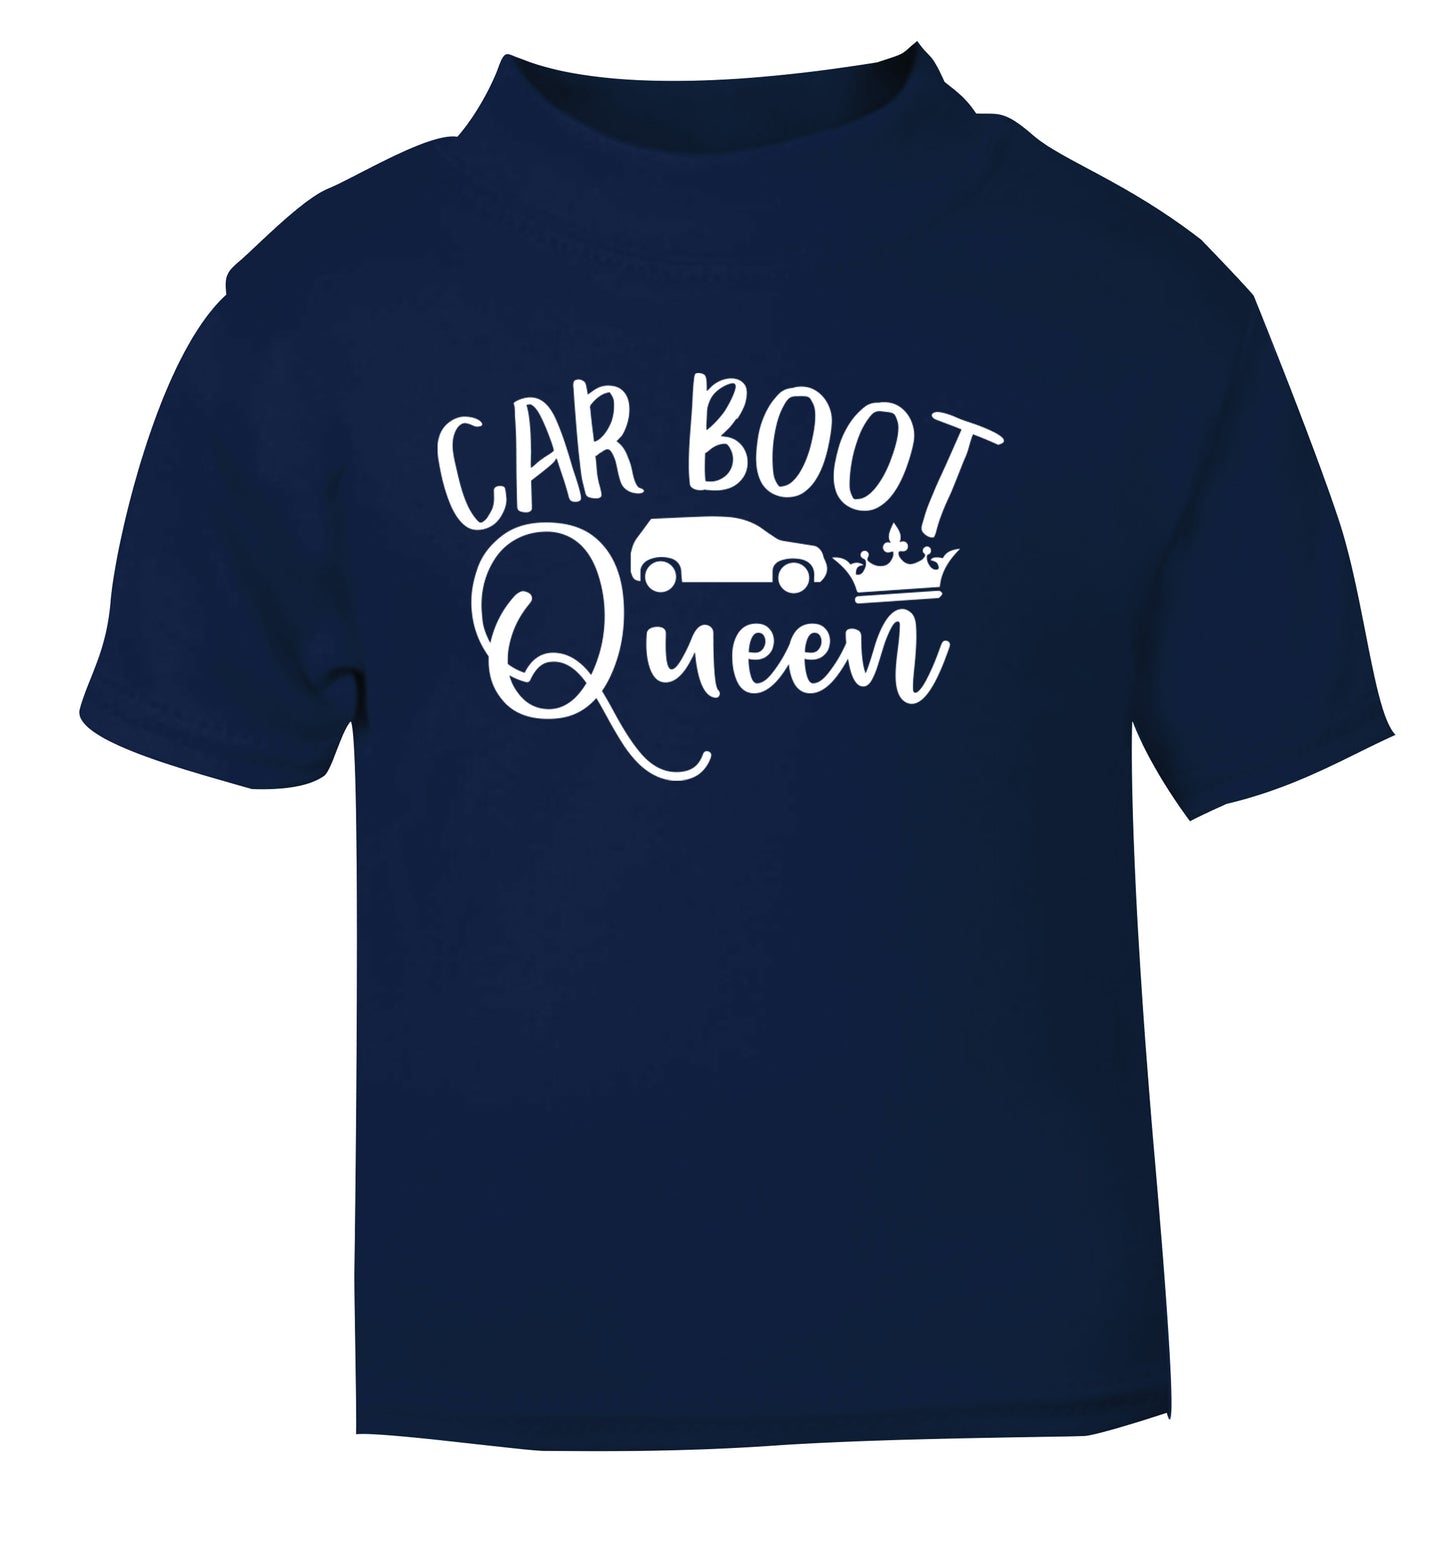 Carboot Queen navy Baby Toddler Tshirt 2 Years